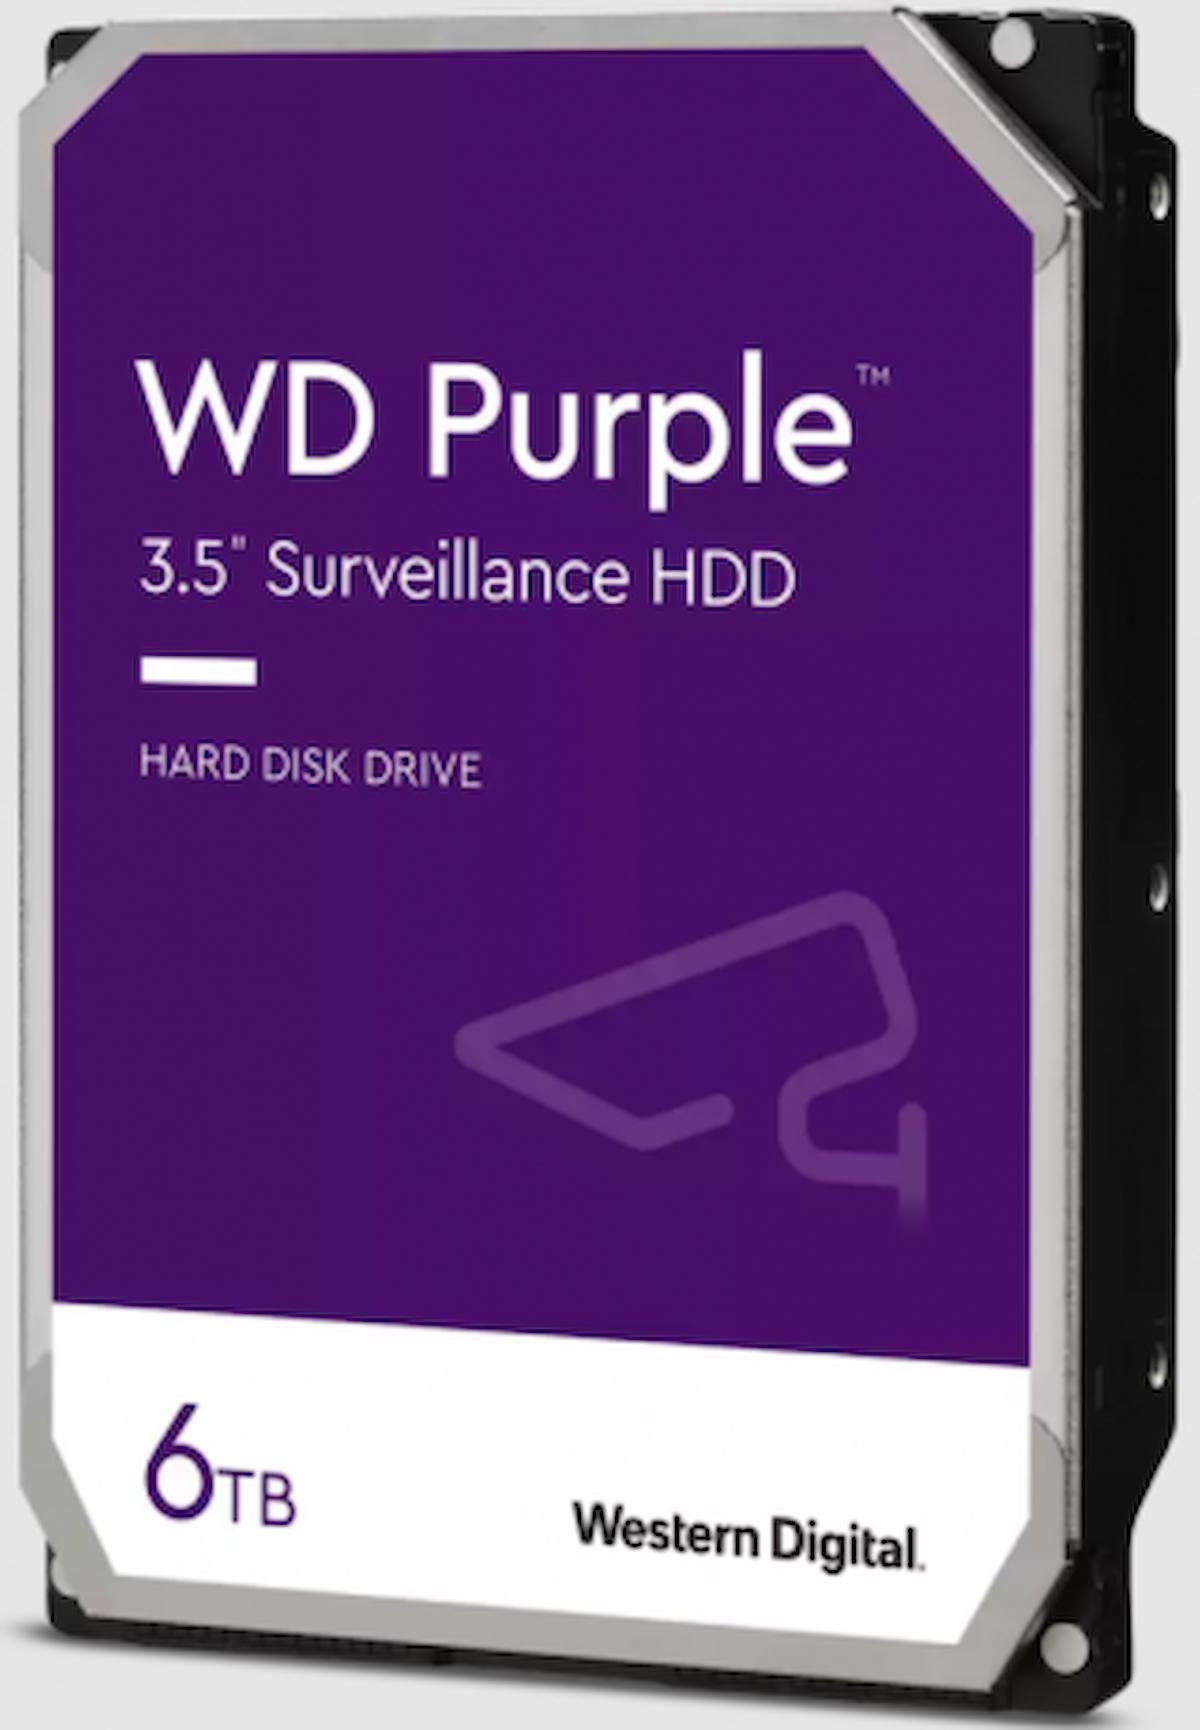 Western Digital WD Purple WD64PURZ 3.5 inç 5400 RPM 256 MB SATA 3.0 Güvenlik Kamerası Harddisk